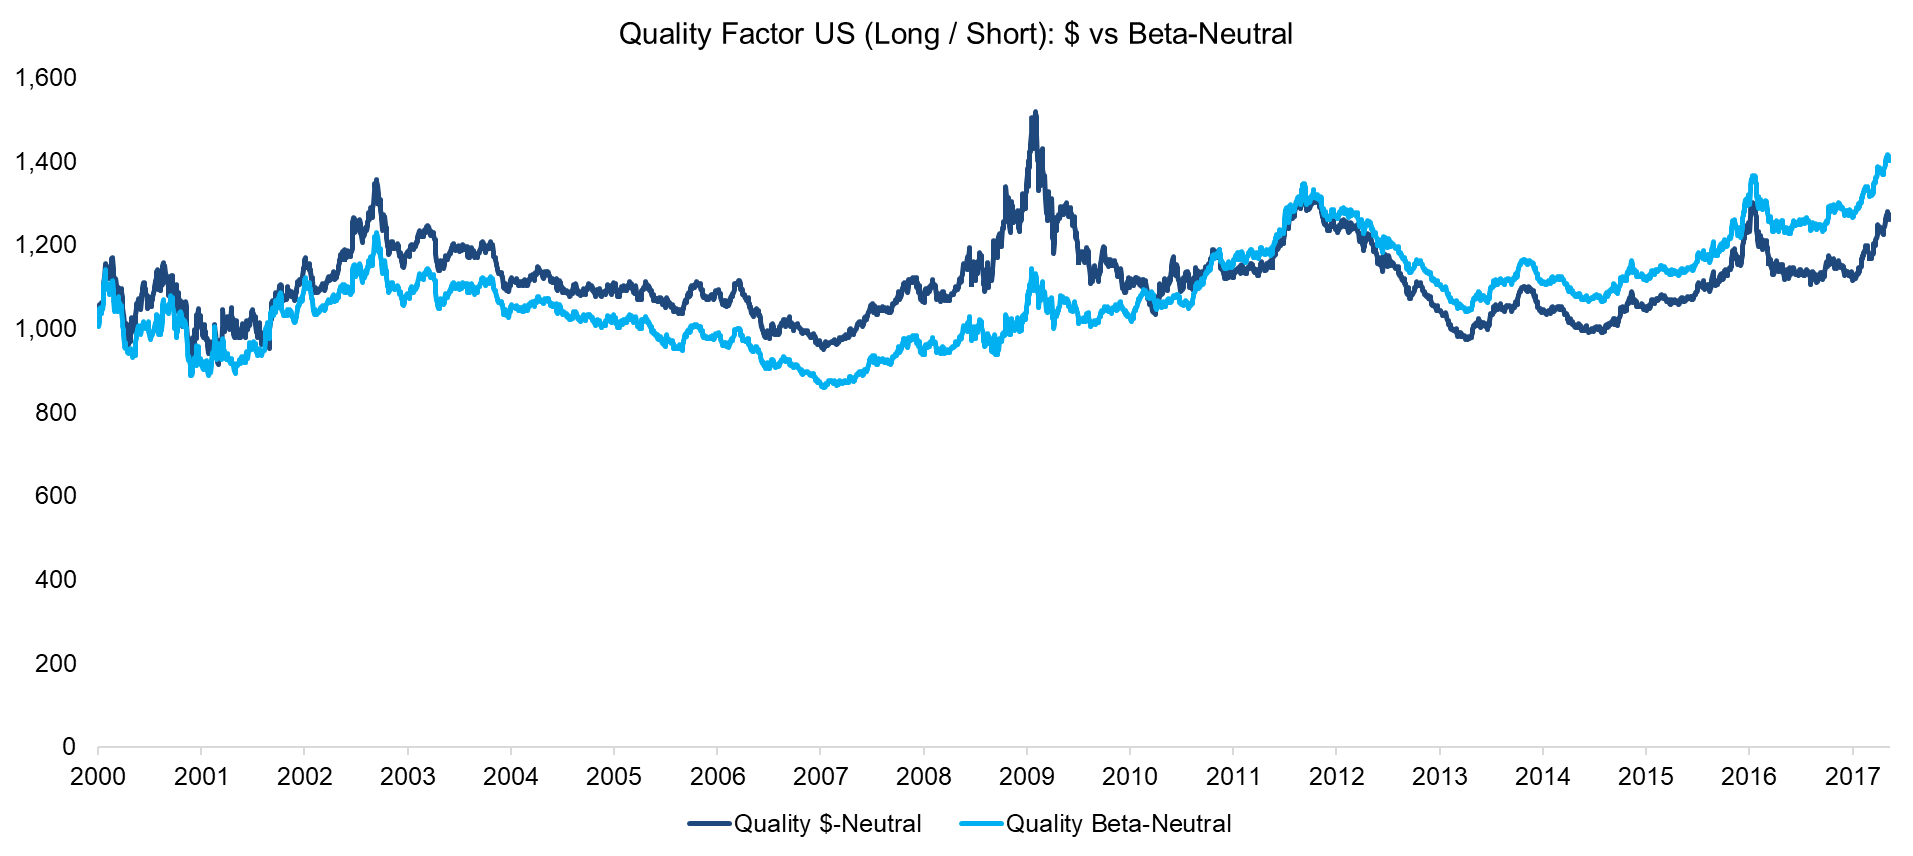 Quality Factor US (Long Short) $ vs Beta-Neutral